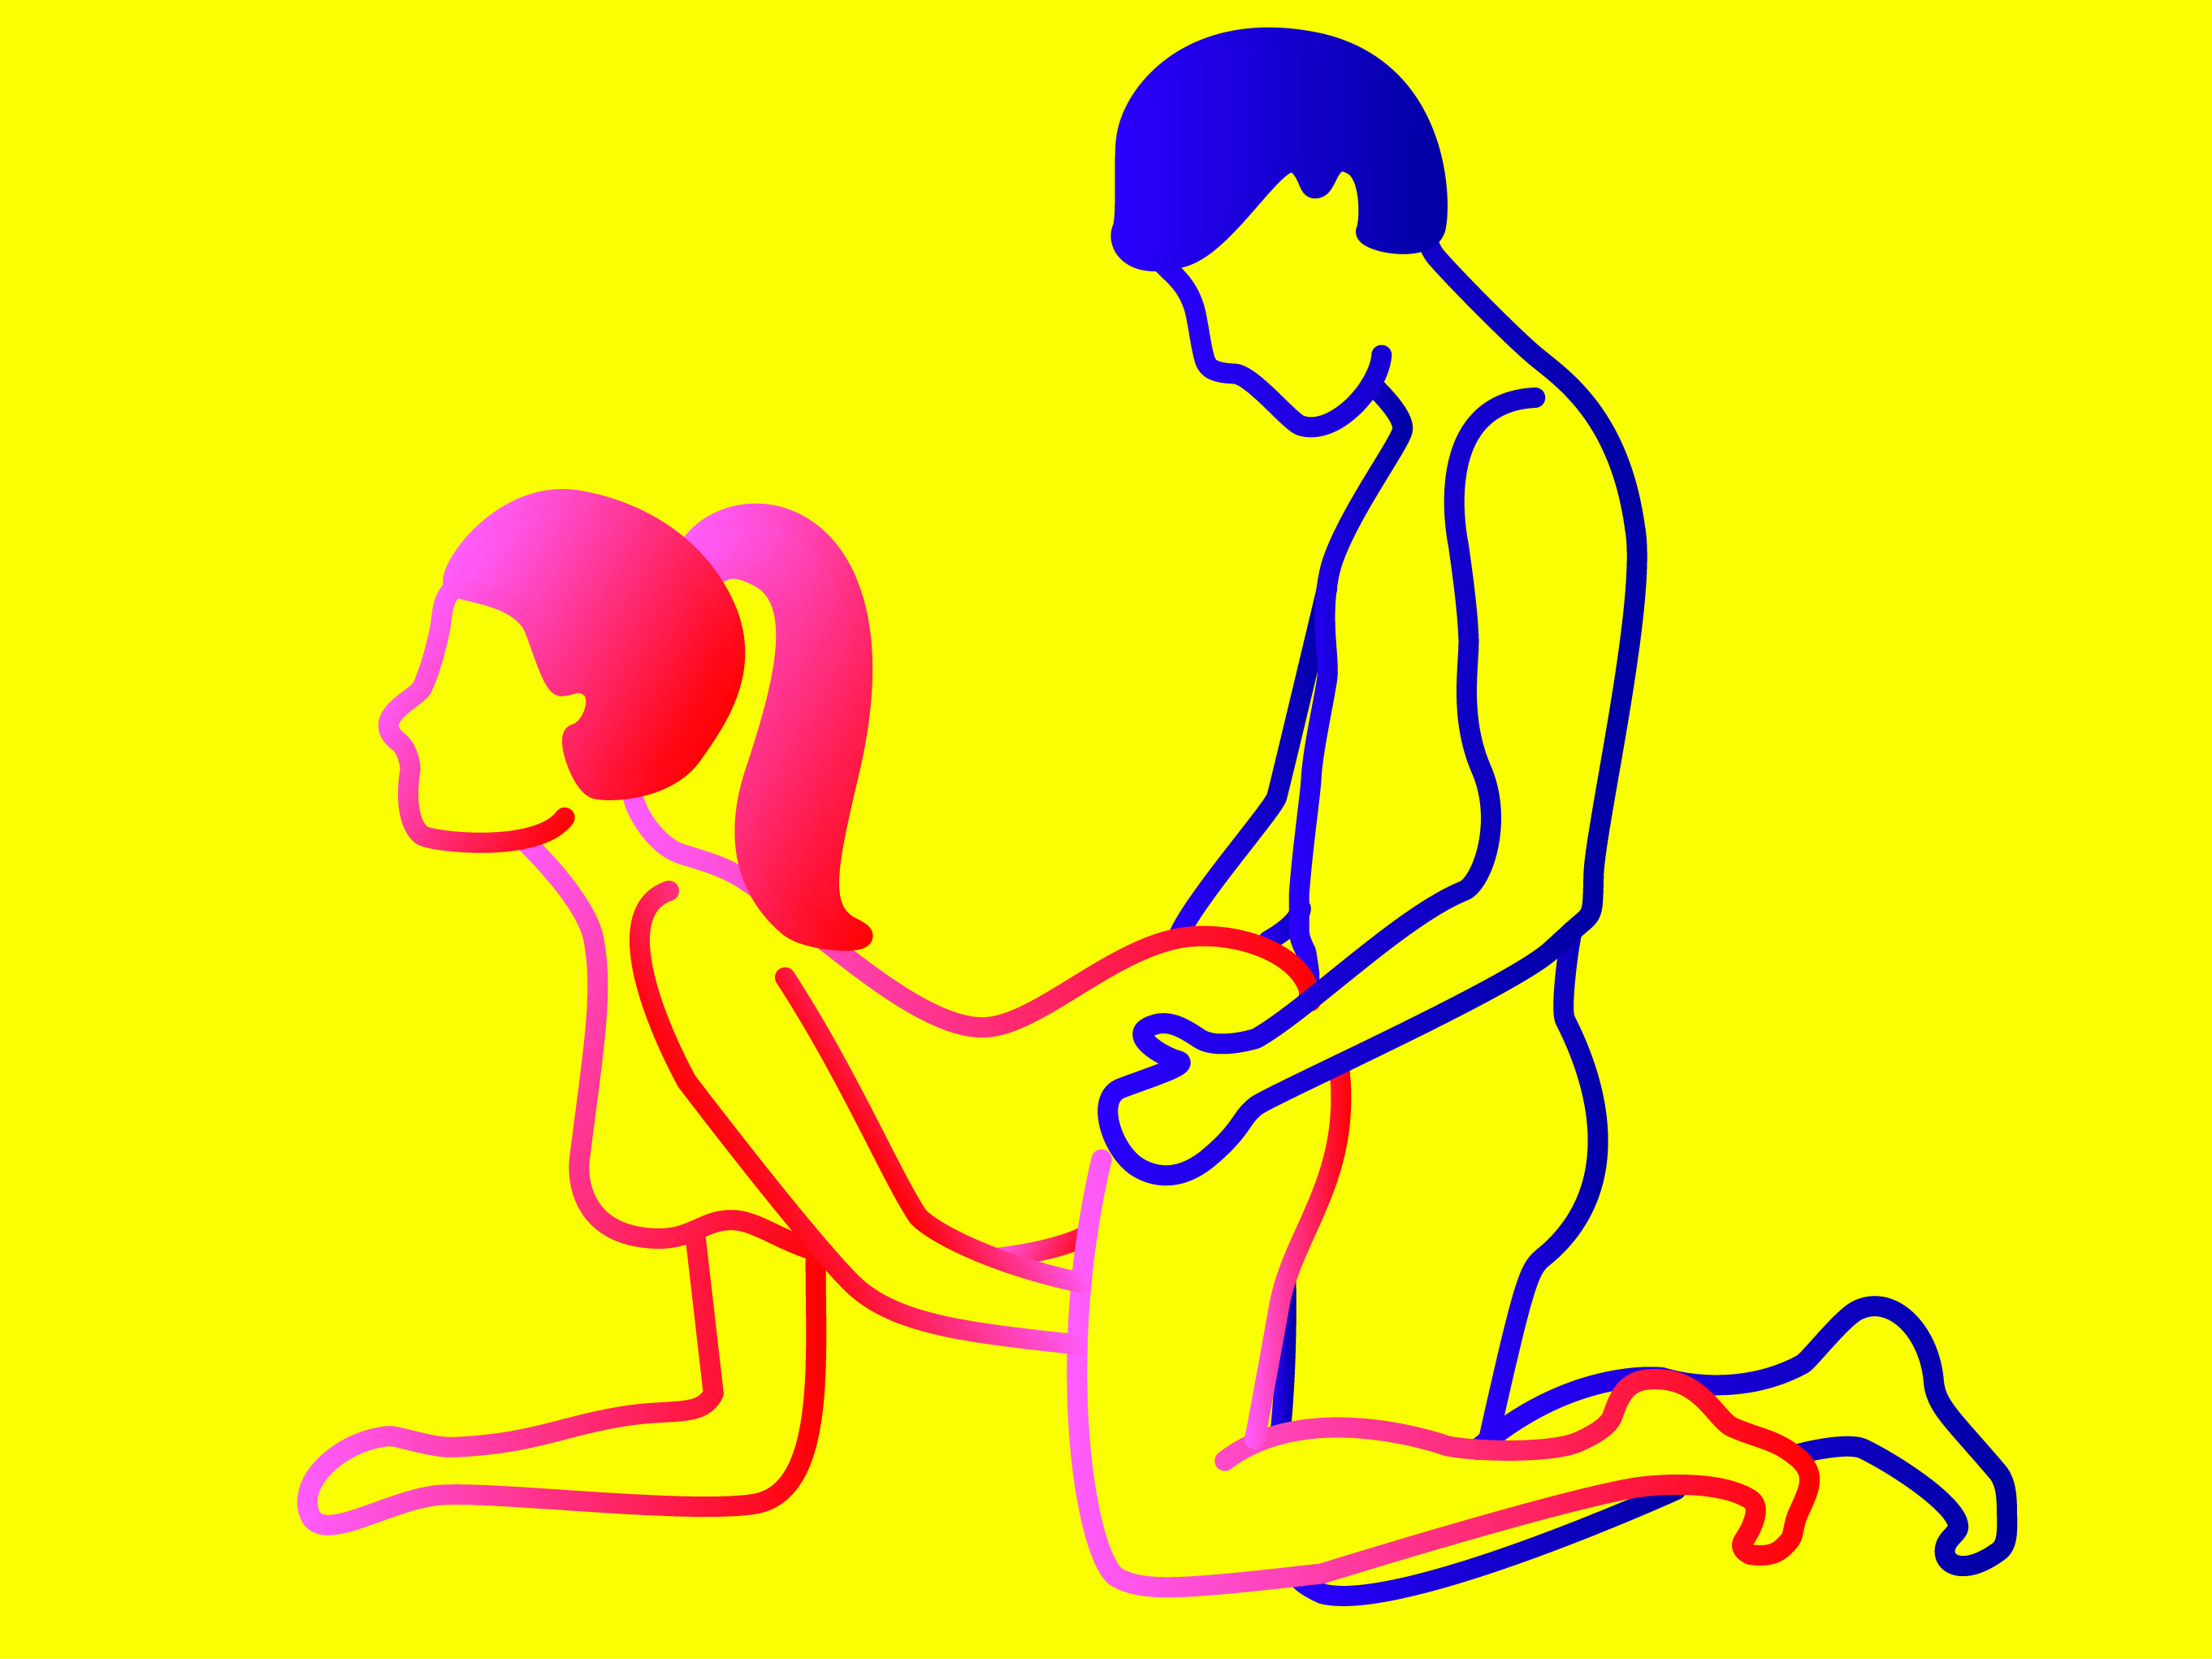 allen boggs share zeus nutsack sex position photos